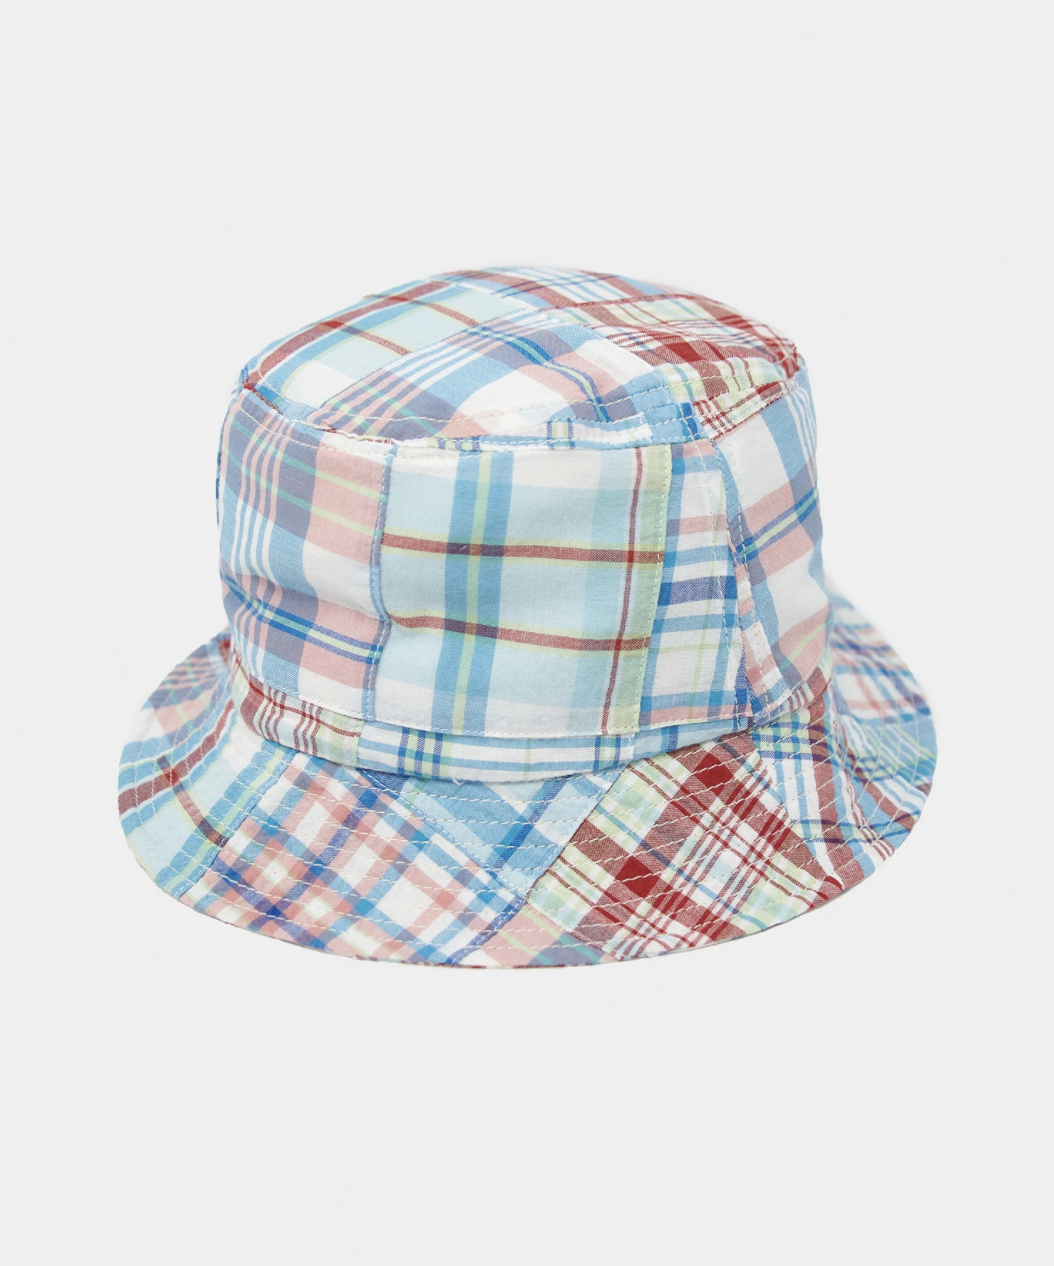 2018 Lovely Summer Music Printed Bucket Hats Outdoor Fishing Sun Caps Kids Girls 